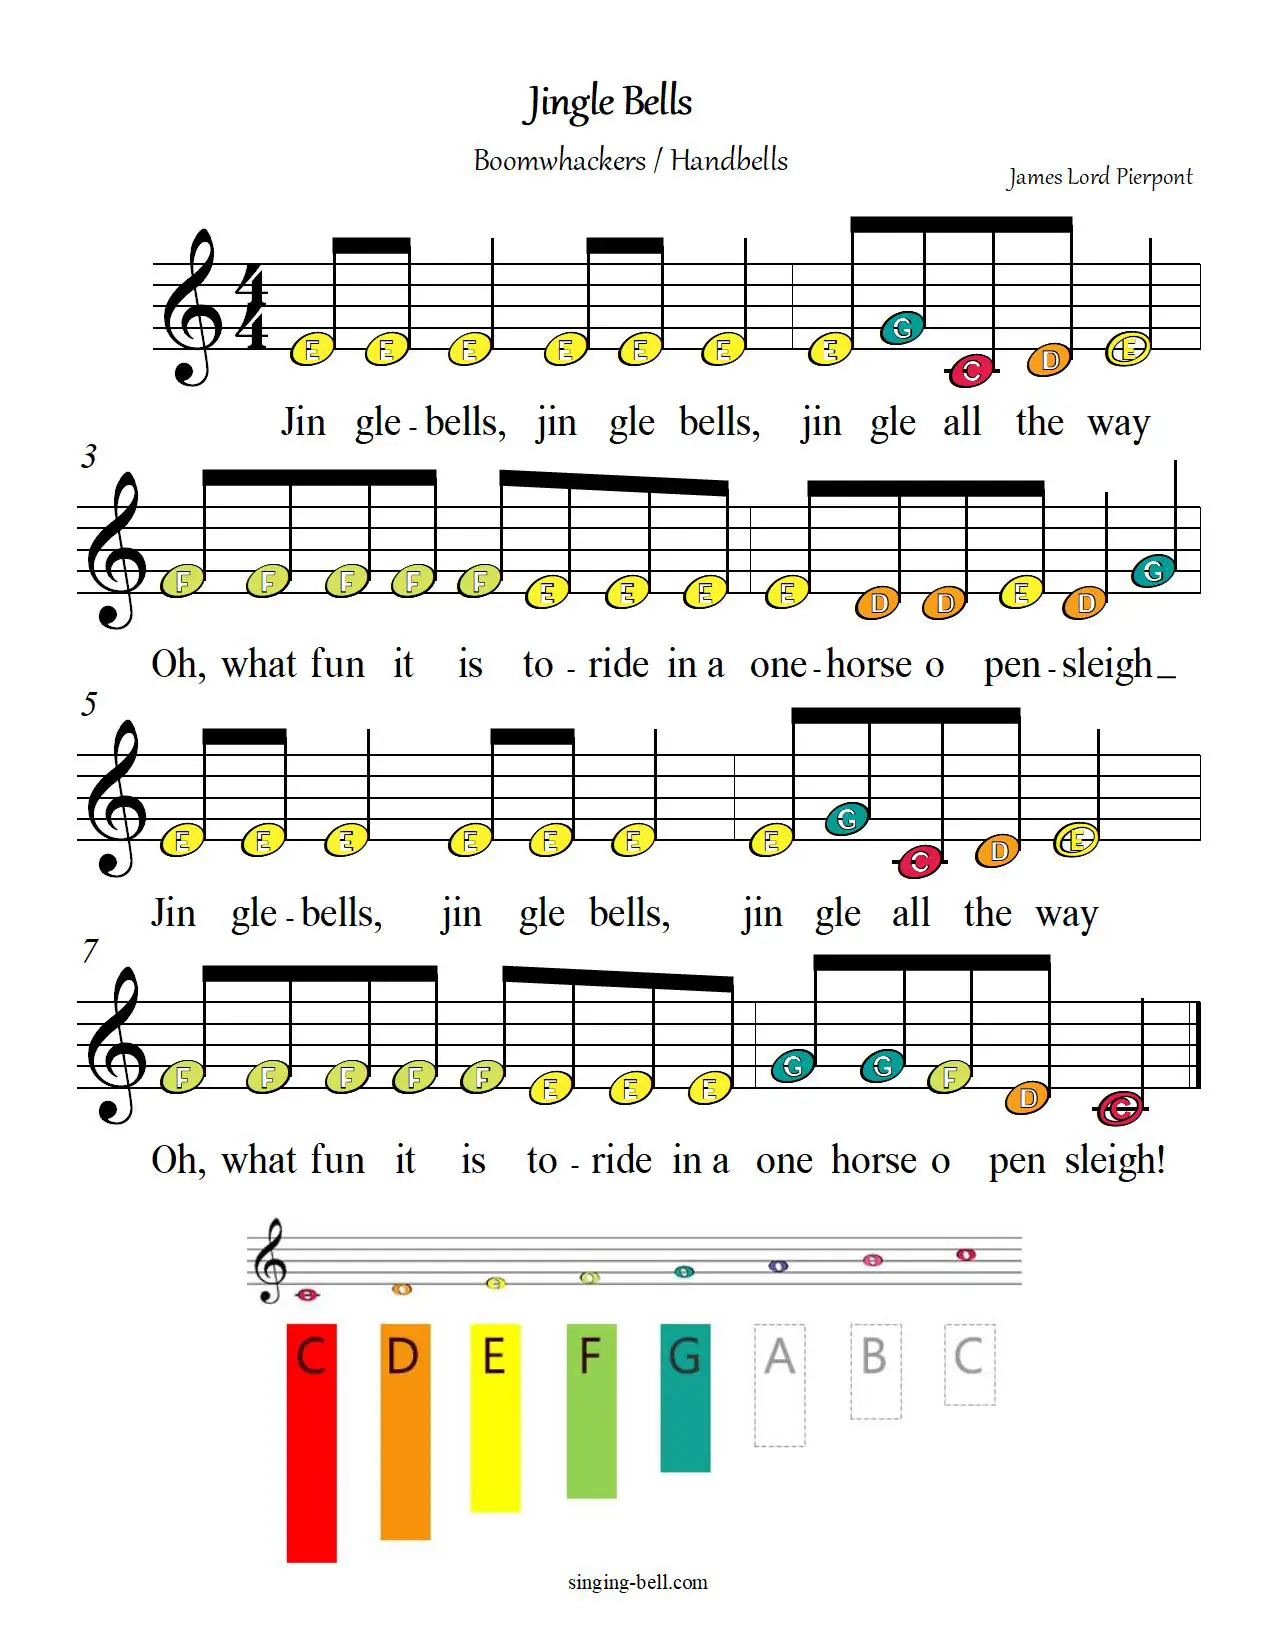 Jingle-Bells free boomwhackers hadbells sheet music color notes chart pdf